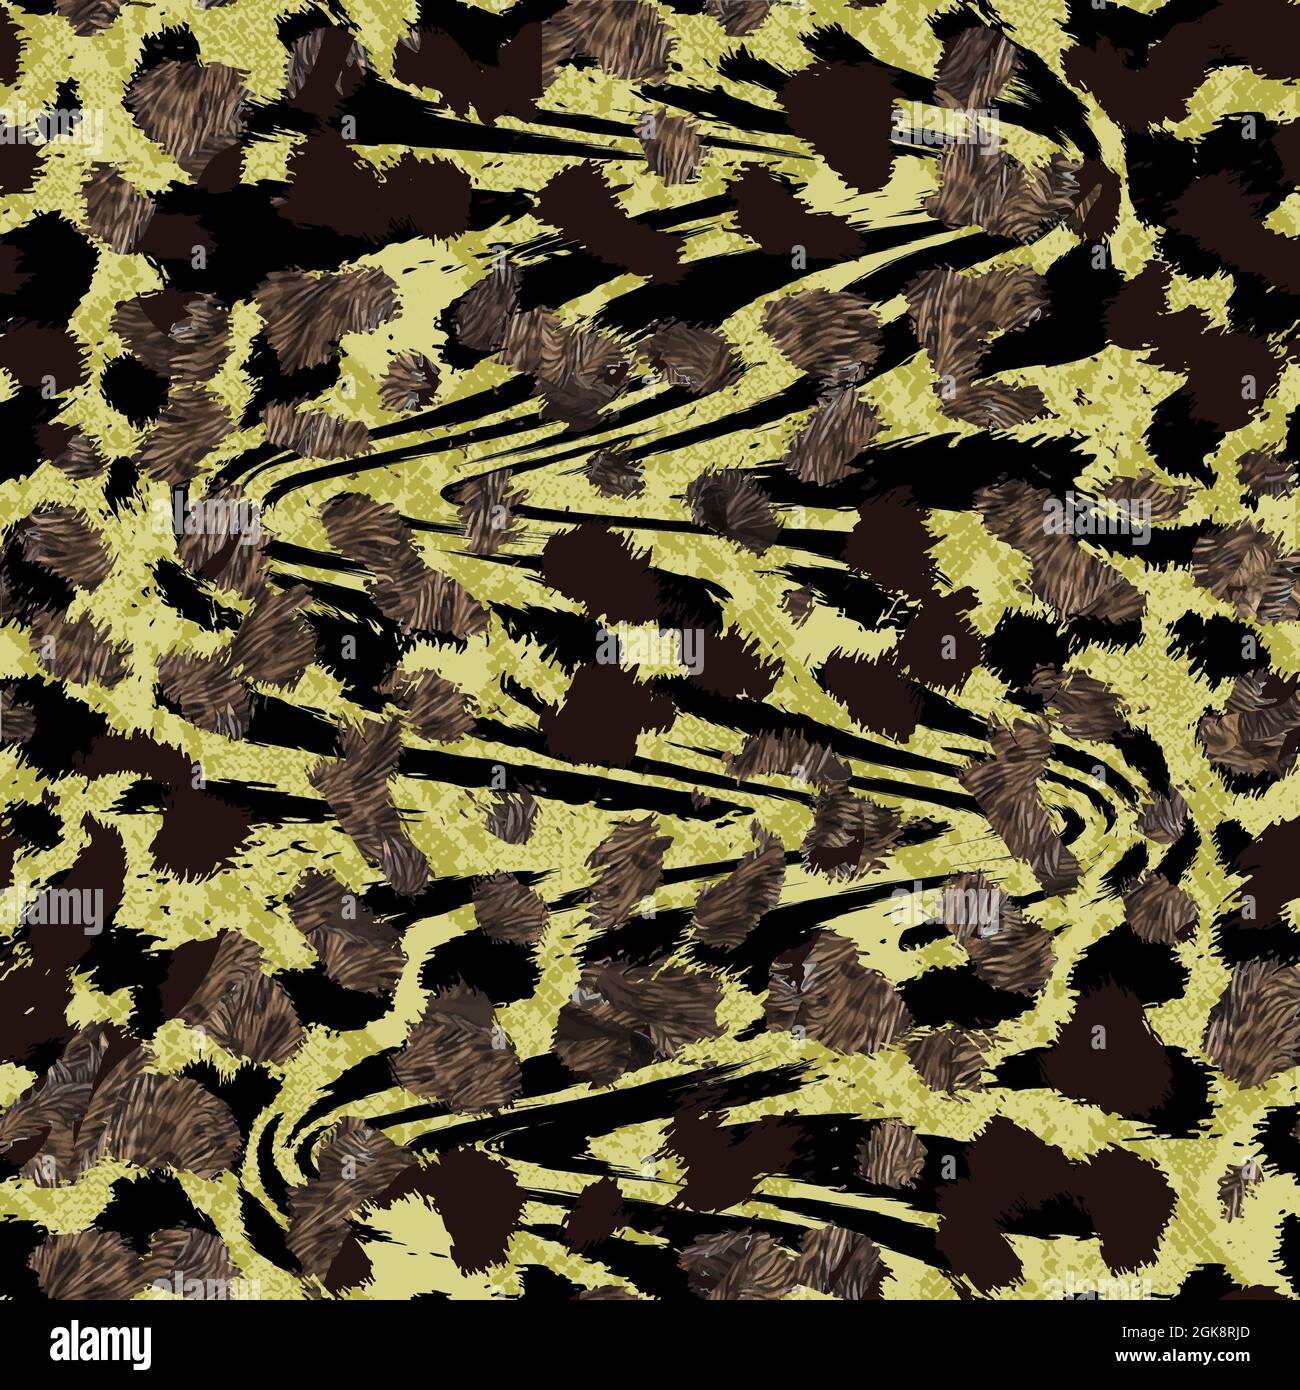 https://c8.alamy.com/comp/2GK8RJD/seamless-leopard-and-fur-pattern-print-like-camouflage-design-2GK8RJD.jpg